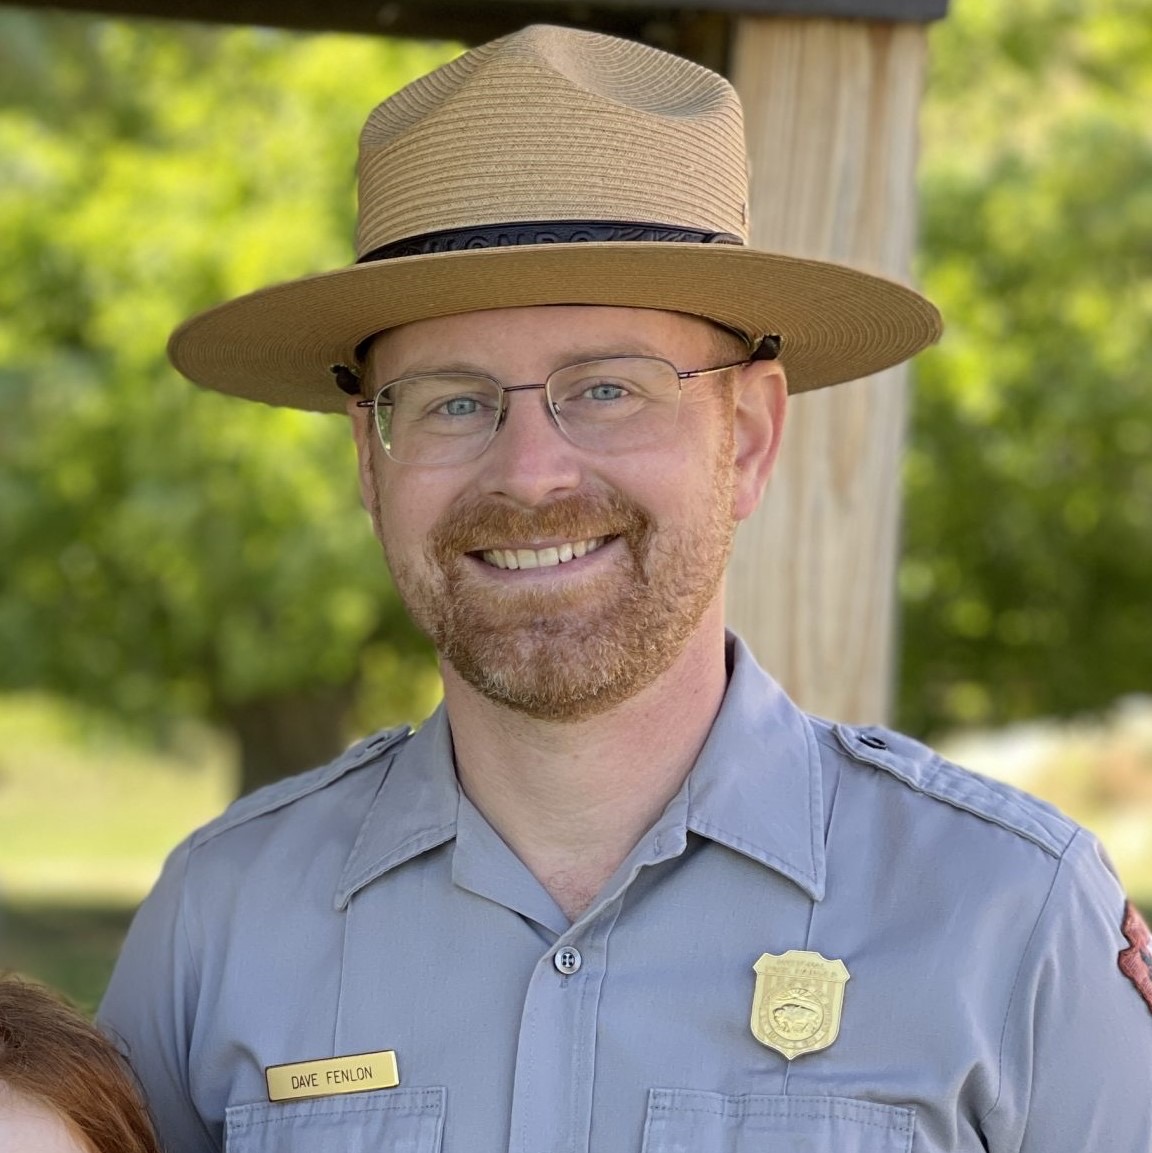 Park Ranger David Fenlon